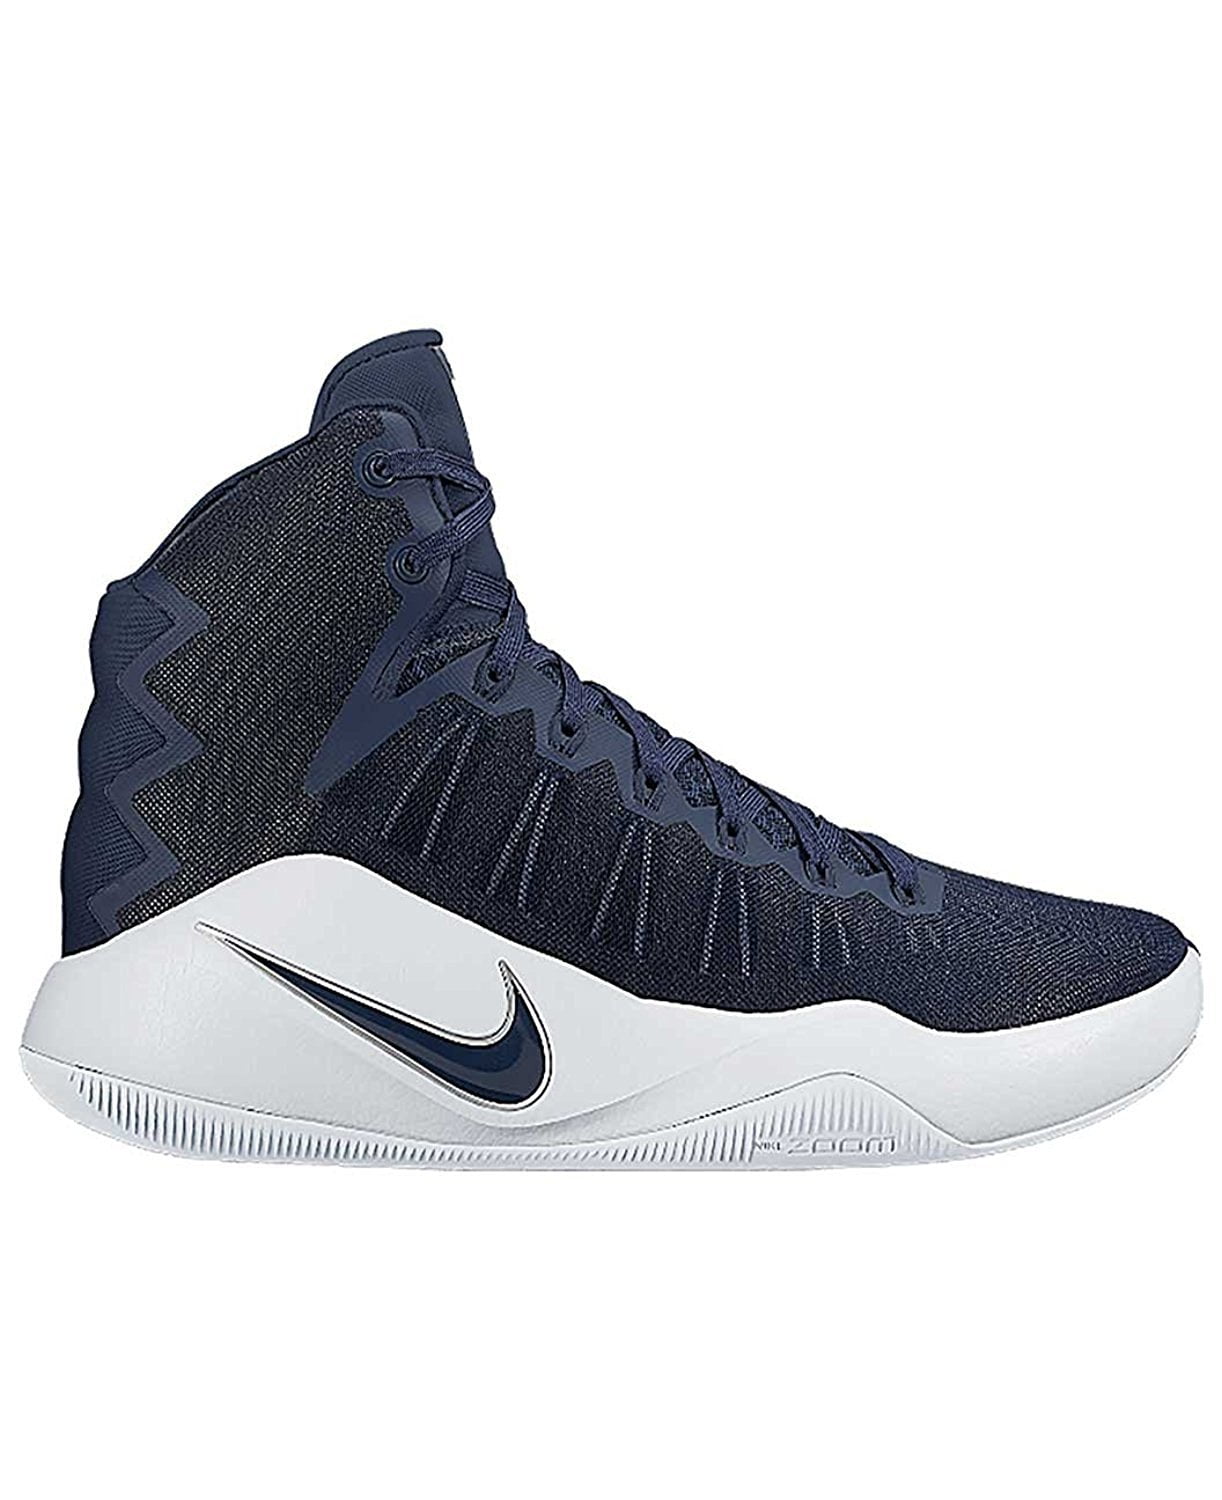 Nike Women's Basketball Shoes - Court Purple/White - 11.0 - Walmart.com